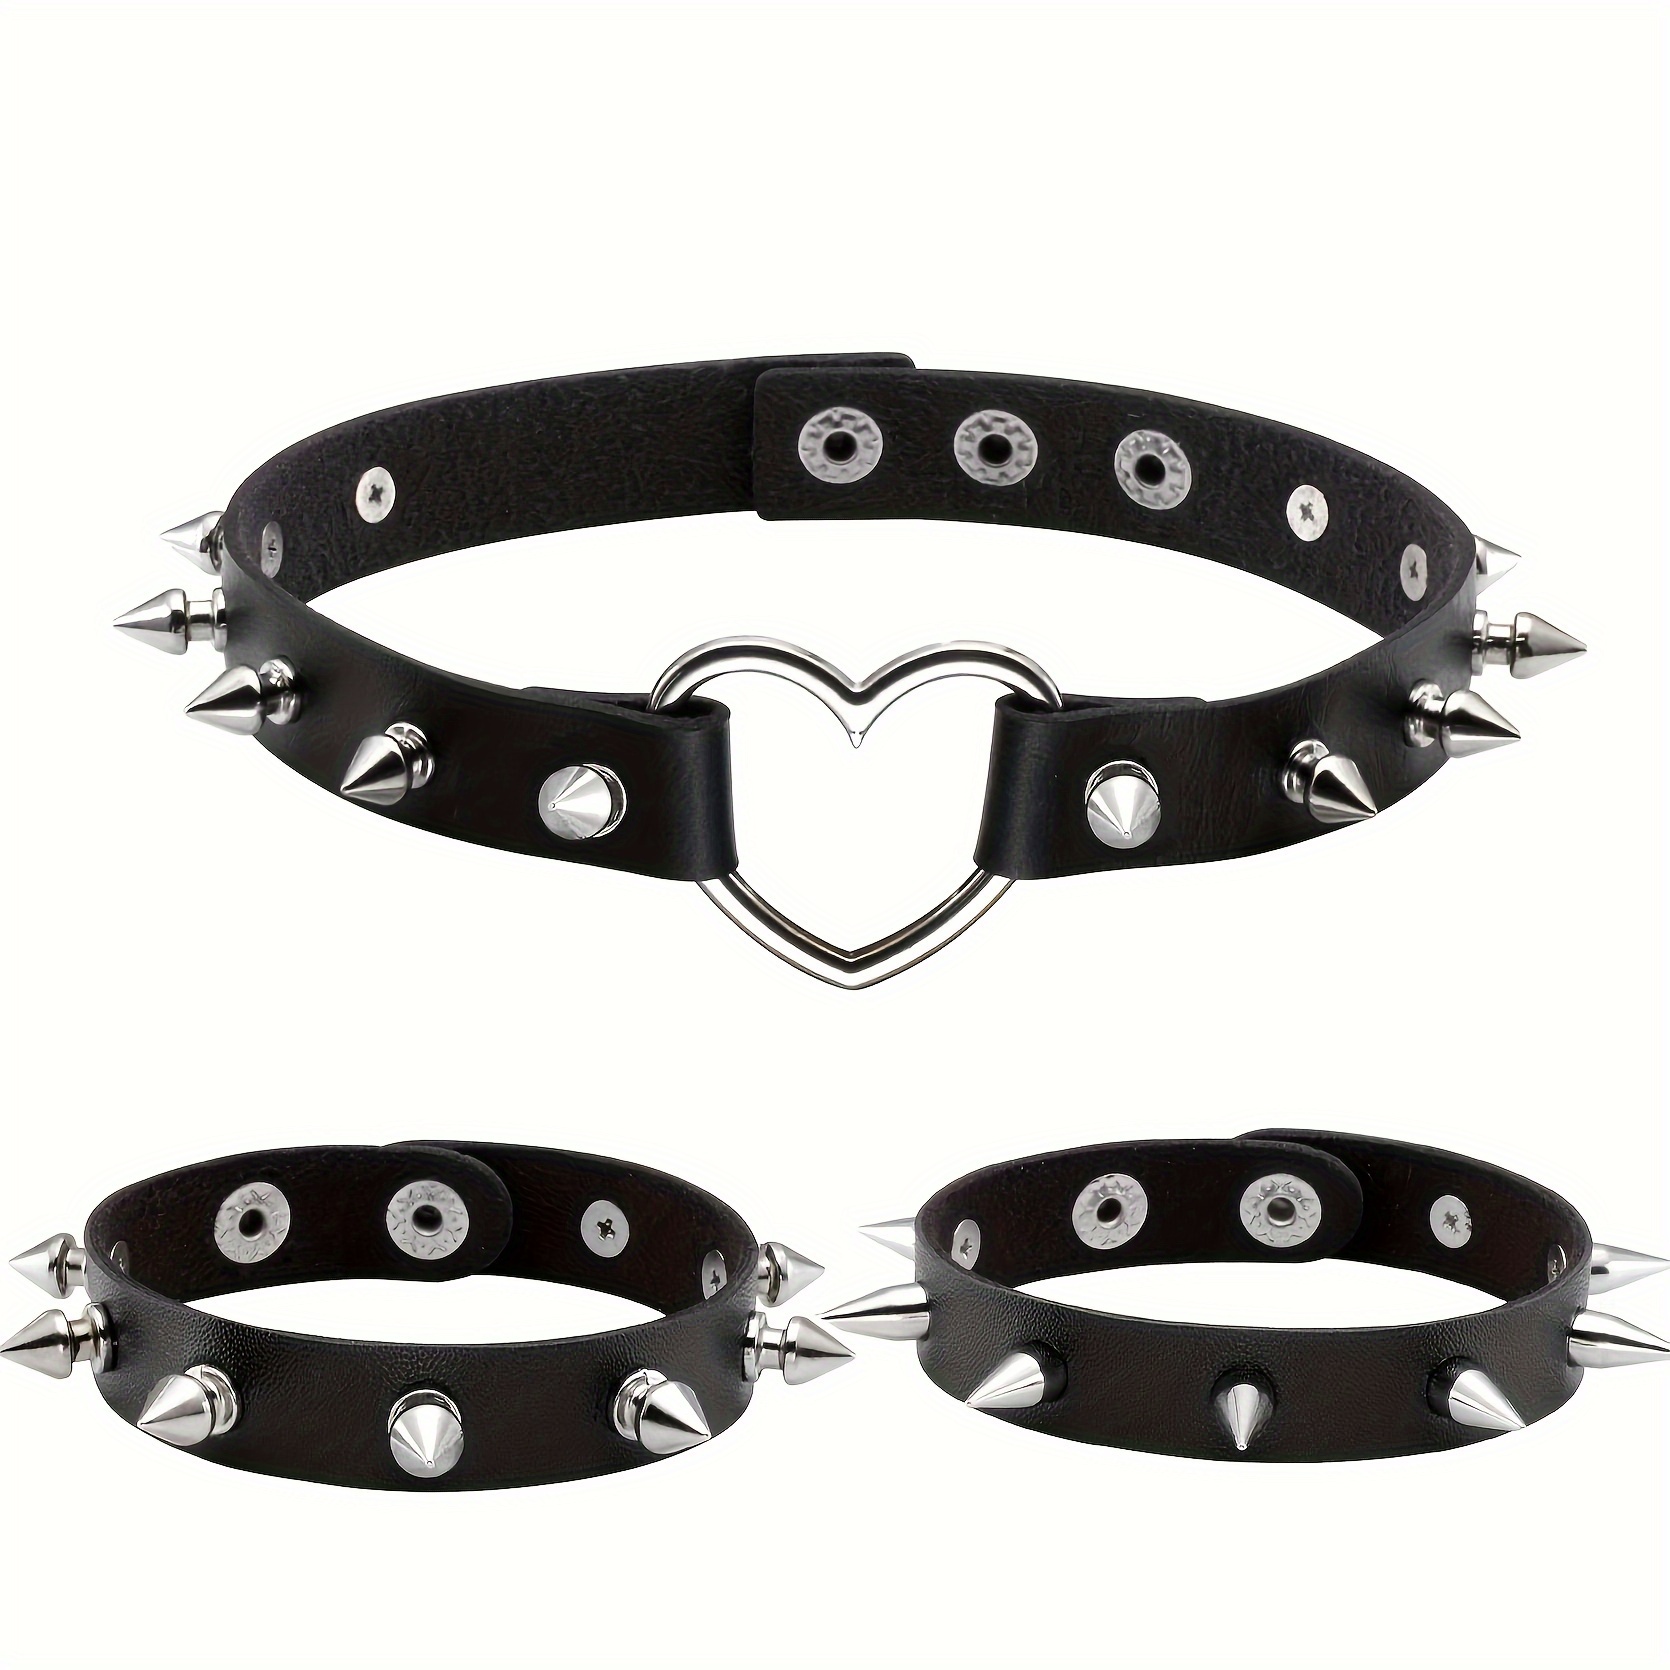 Punk Halter Bra Harness Belt, PU Leather Cross Hollow Out Bondage Belts,  Women's Sexy Lingerie & Underwear Accessories